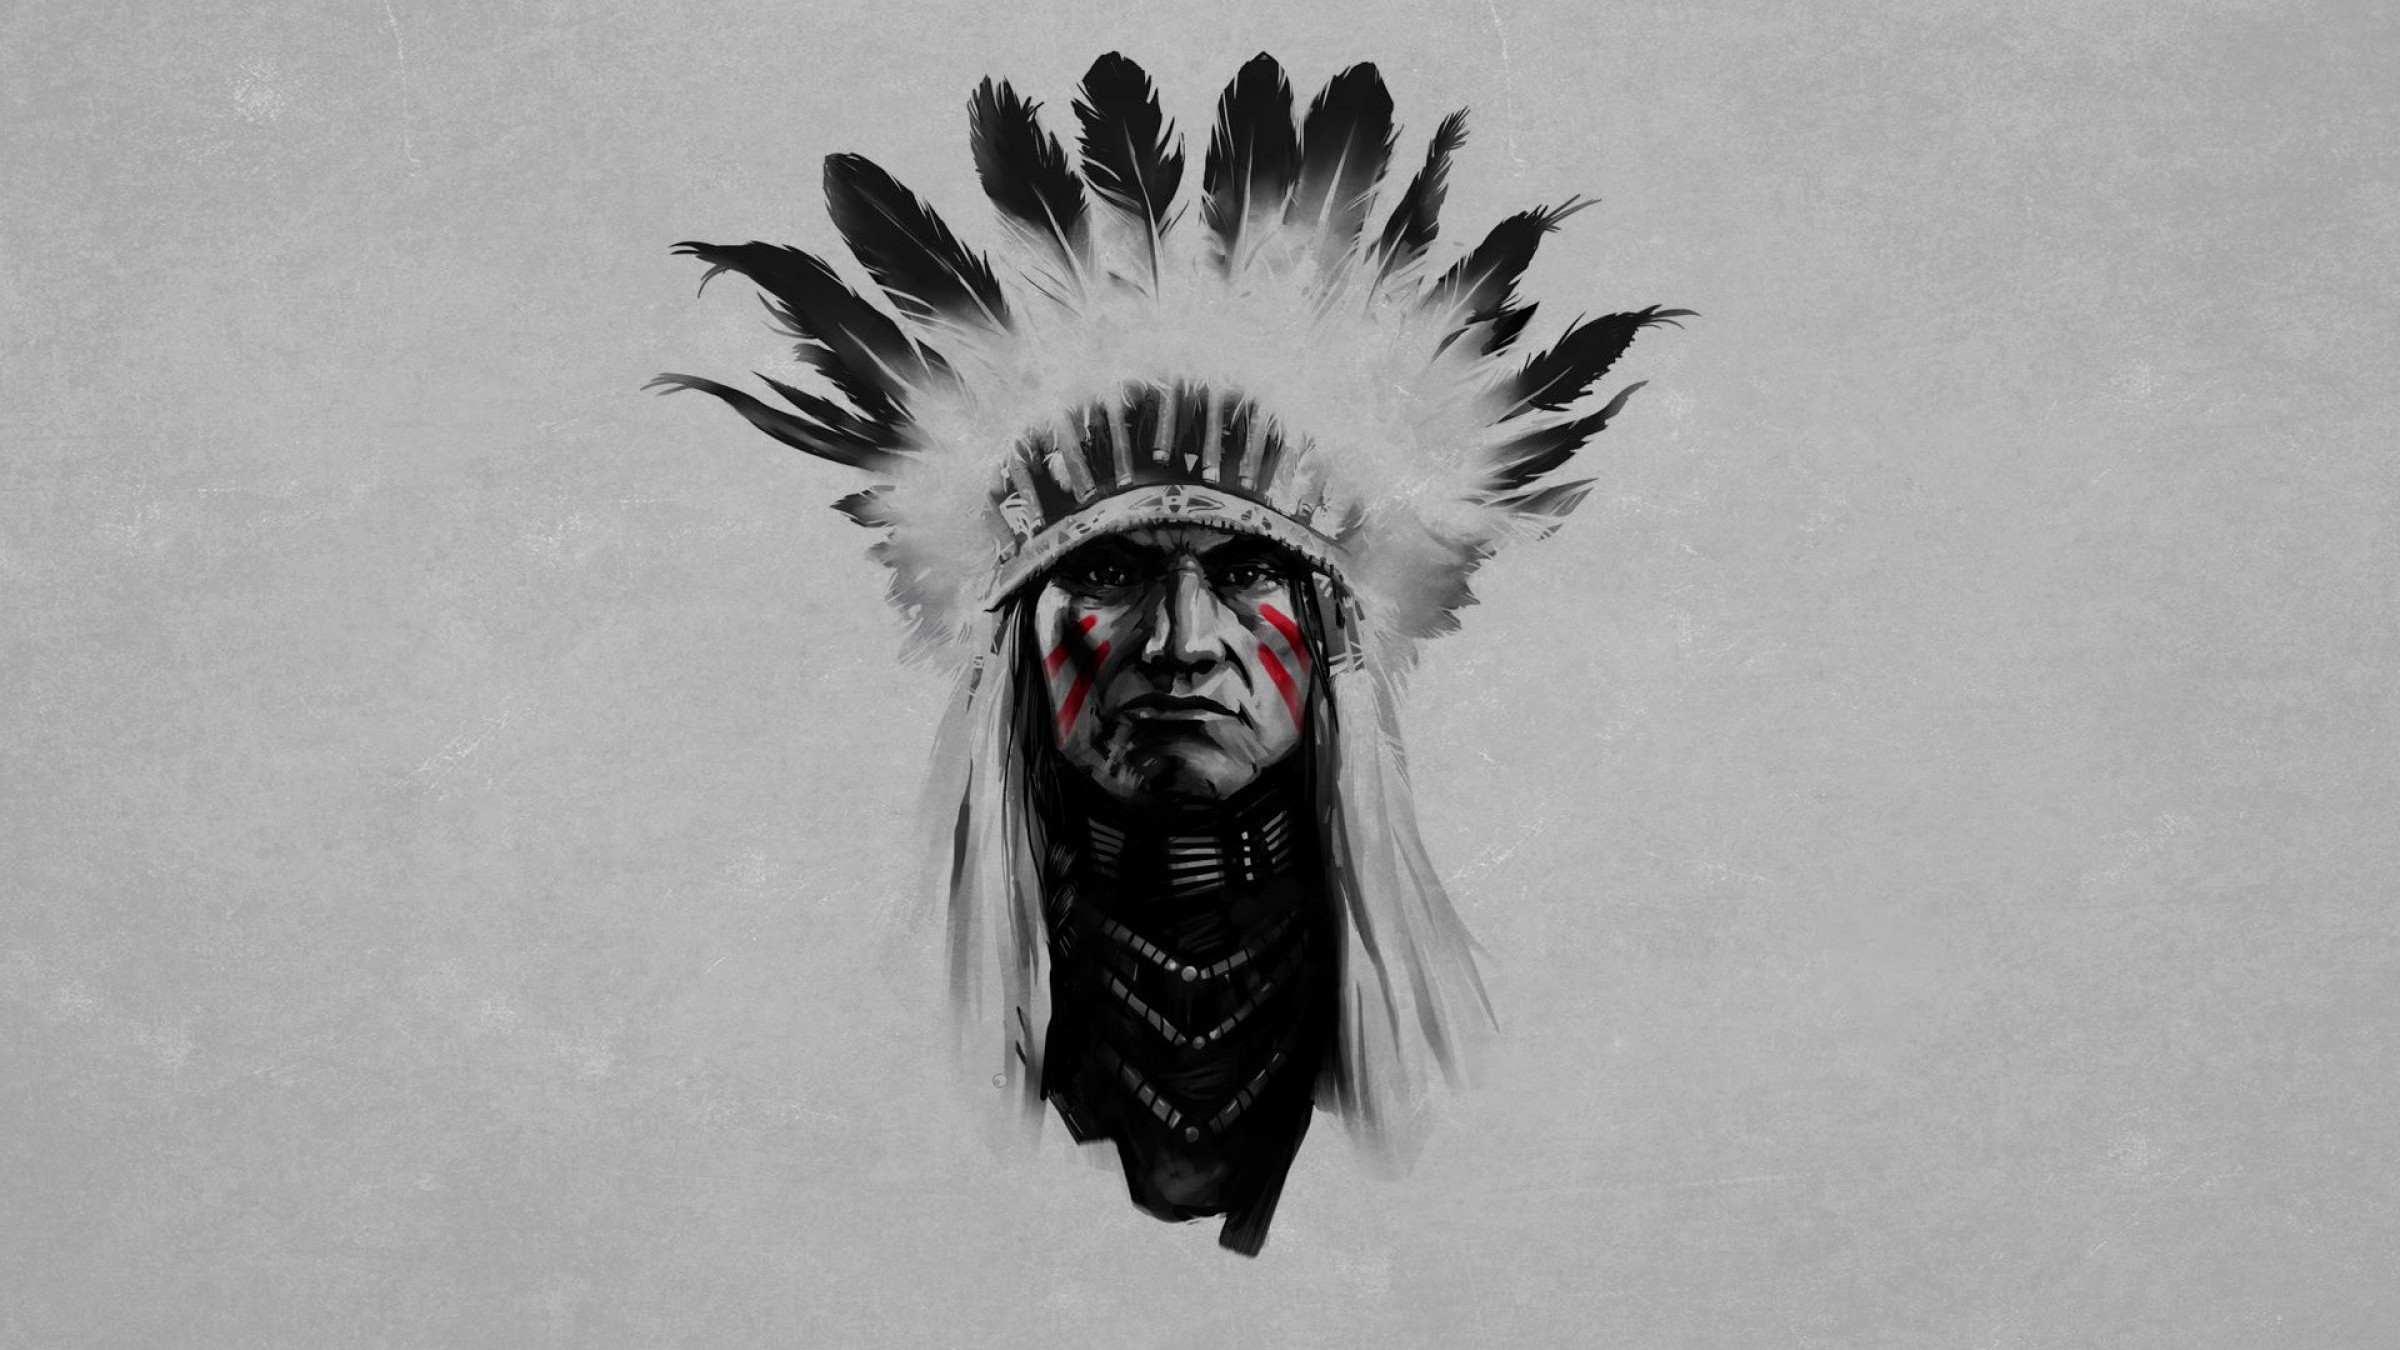 General 2400x1350 Native Americans feathers men pride simple background portrait artwork headdress digital art selective coloring